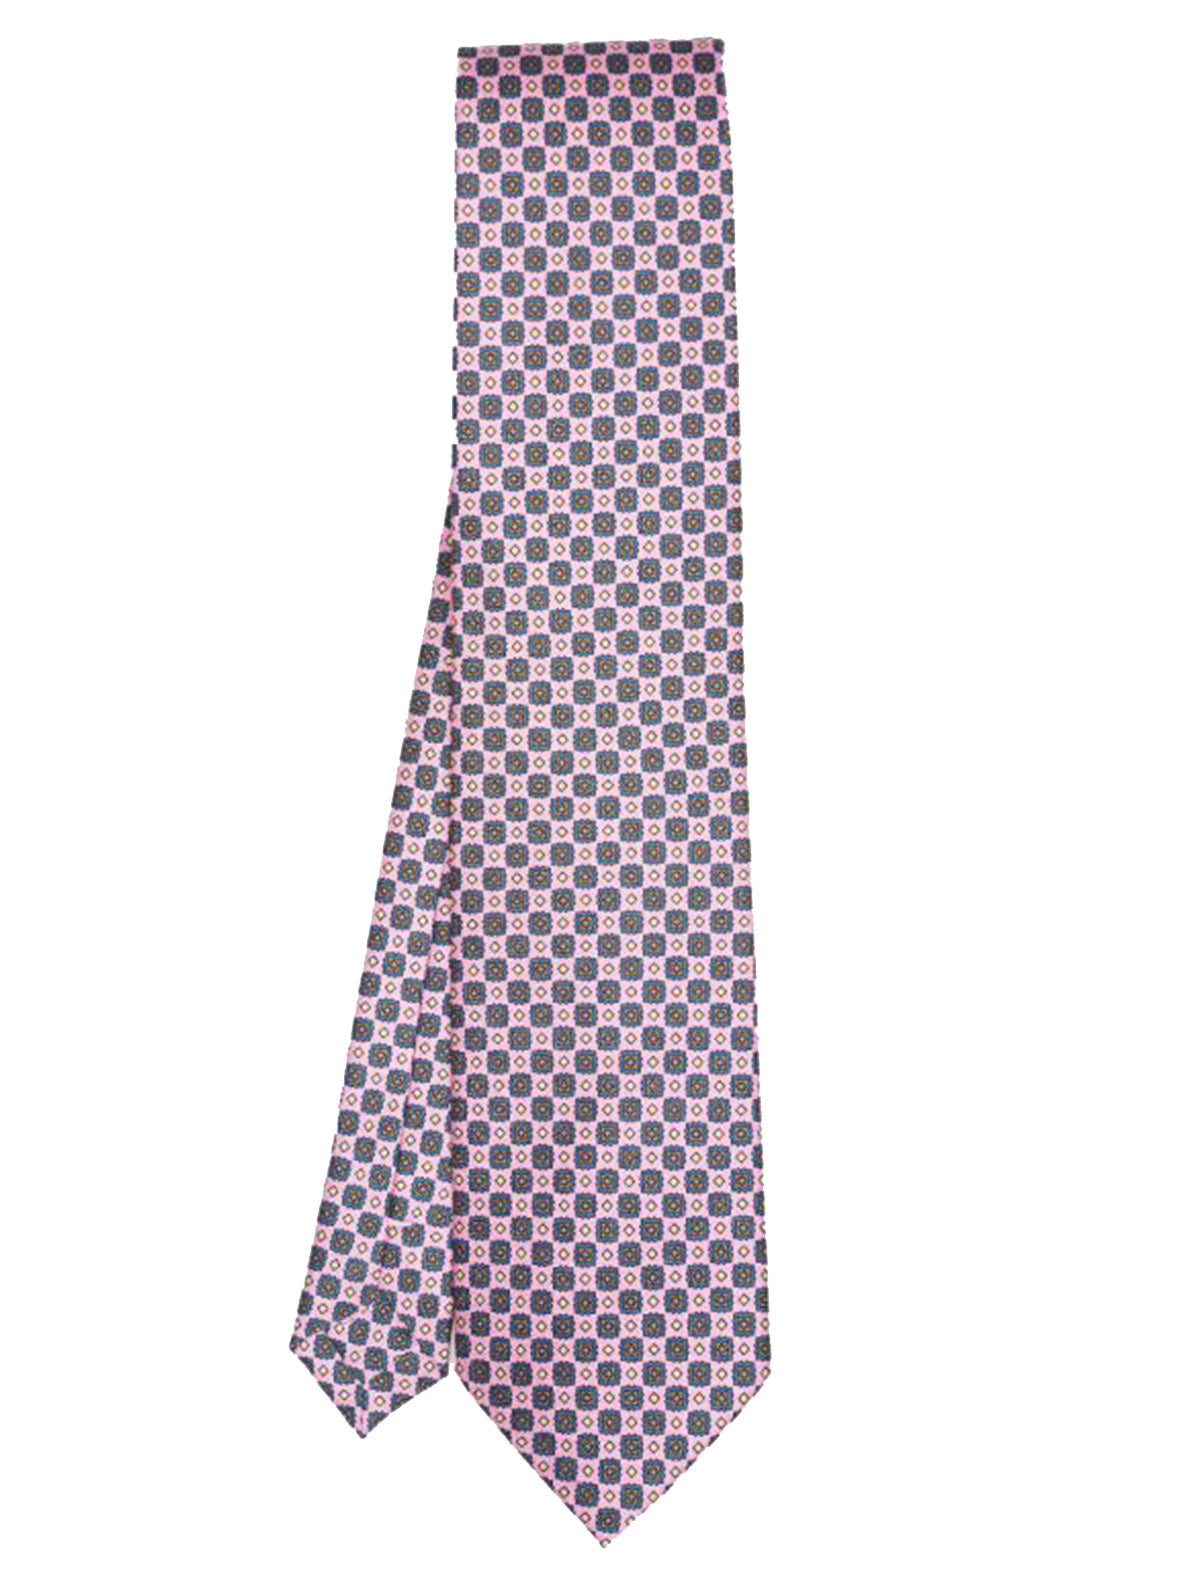 E.Marinella Hand-Printed Silk Tie in Light Pink